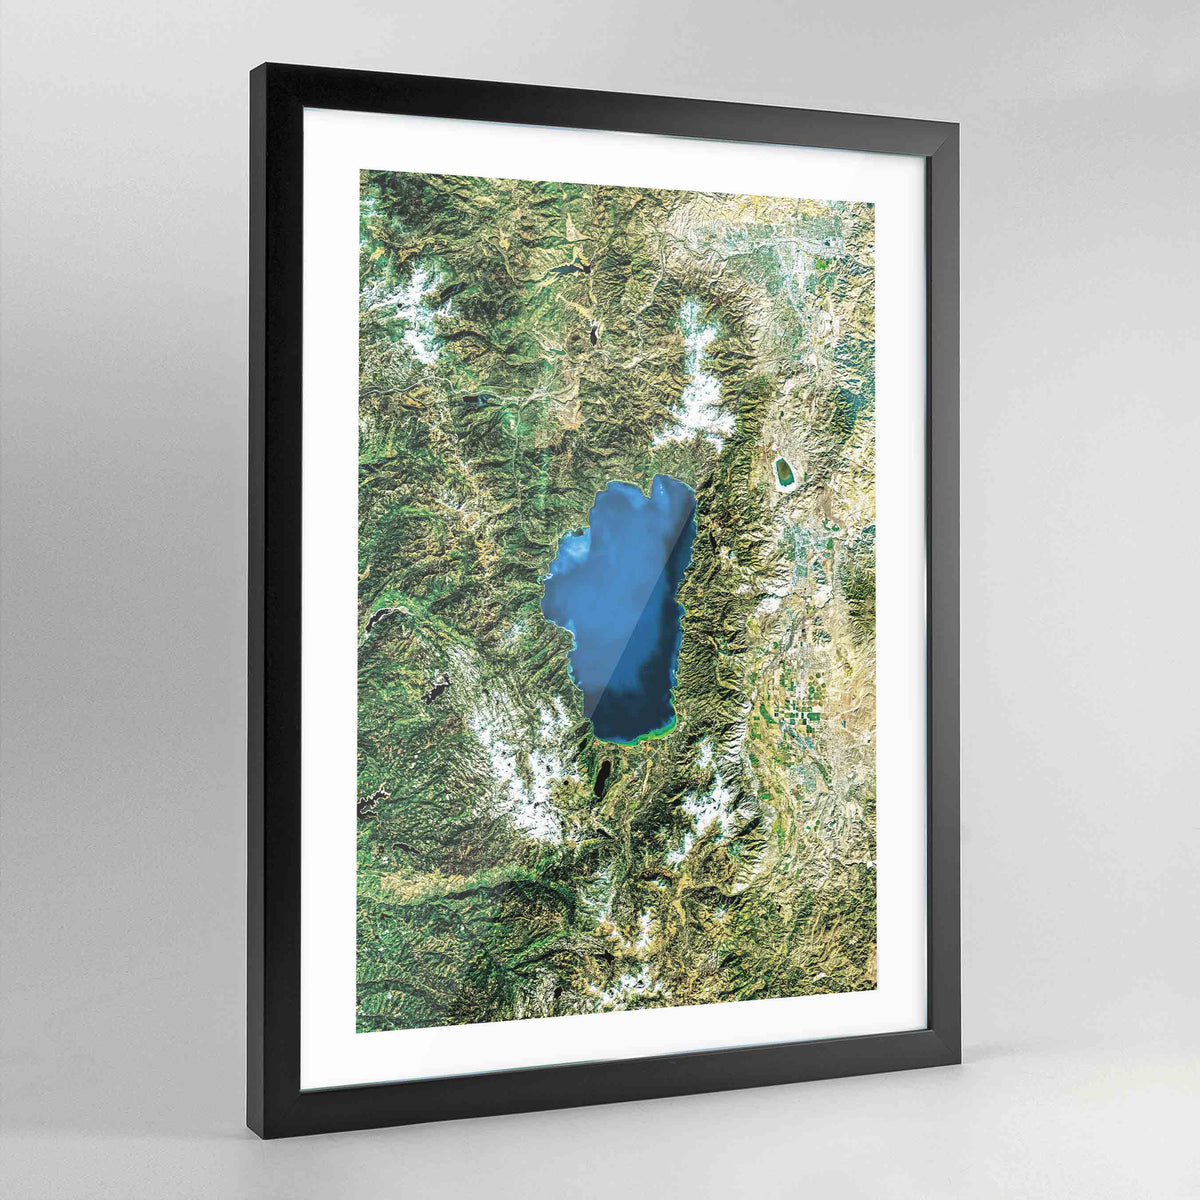 Lake Tahoe Earth Photography Art Print - Framed